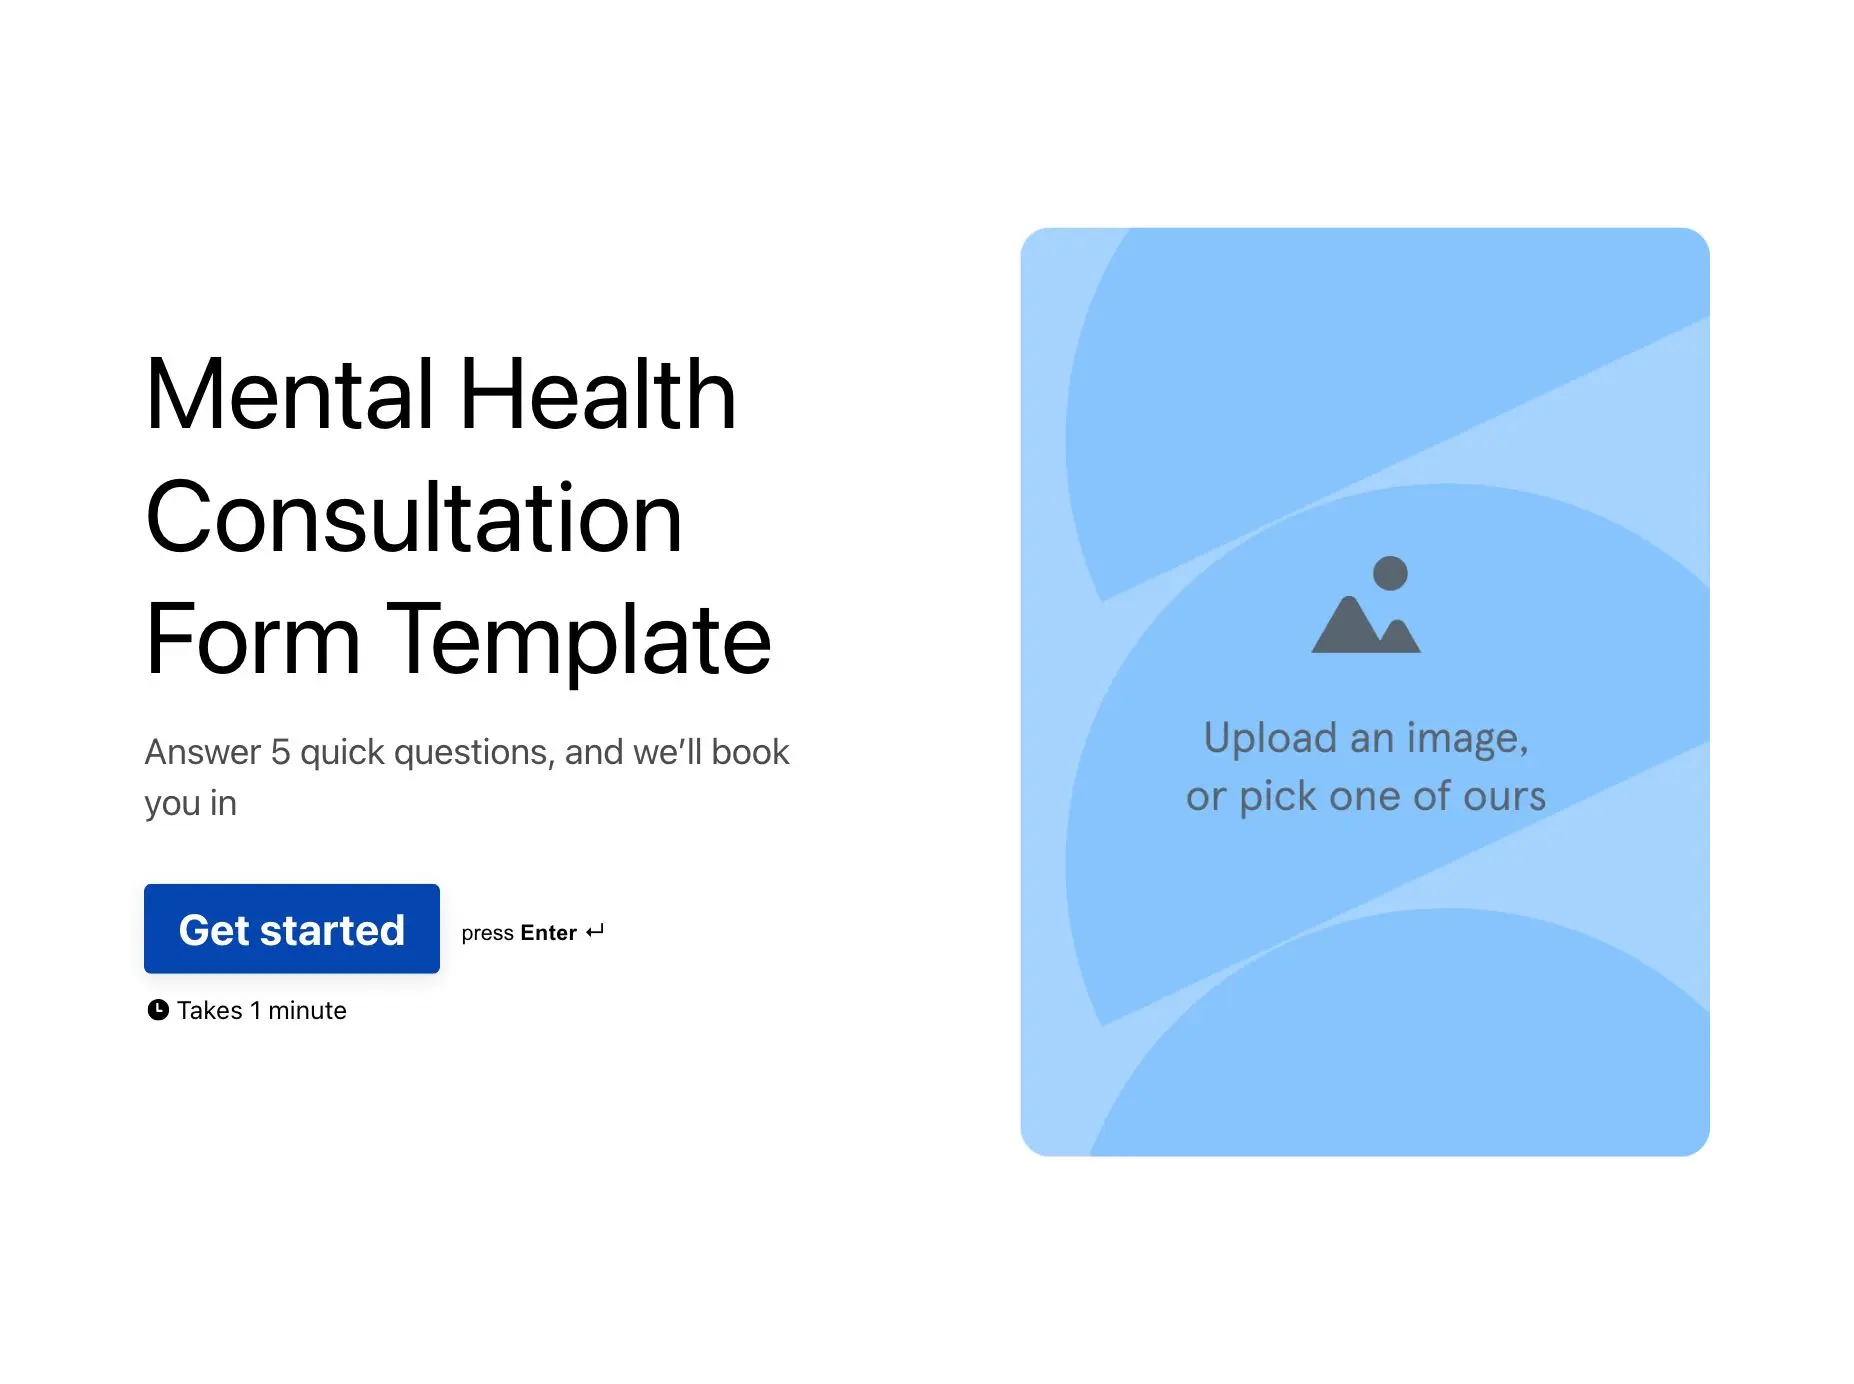 Mental Health Consultation Form Template Hero